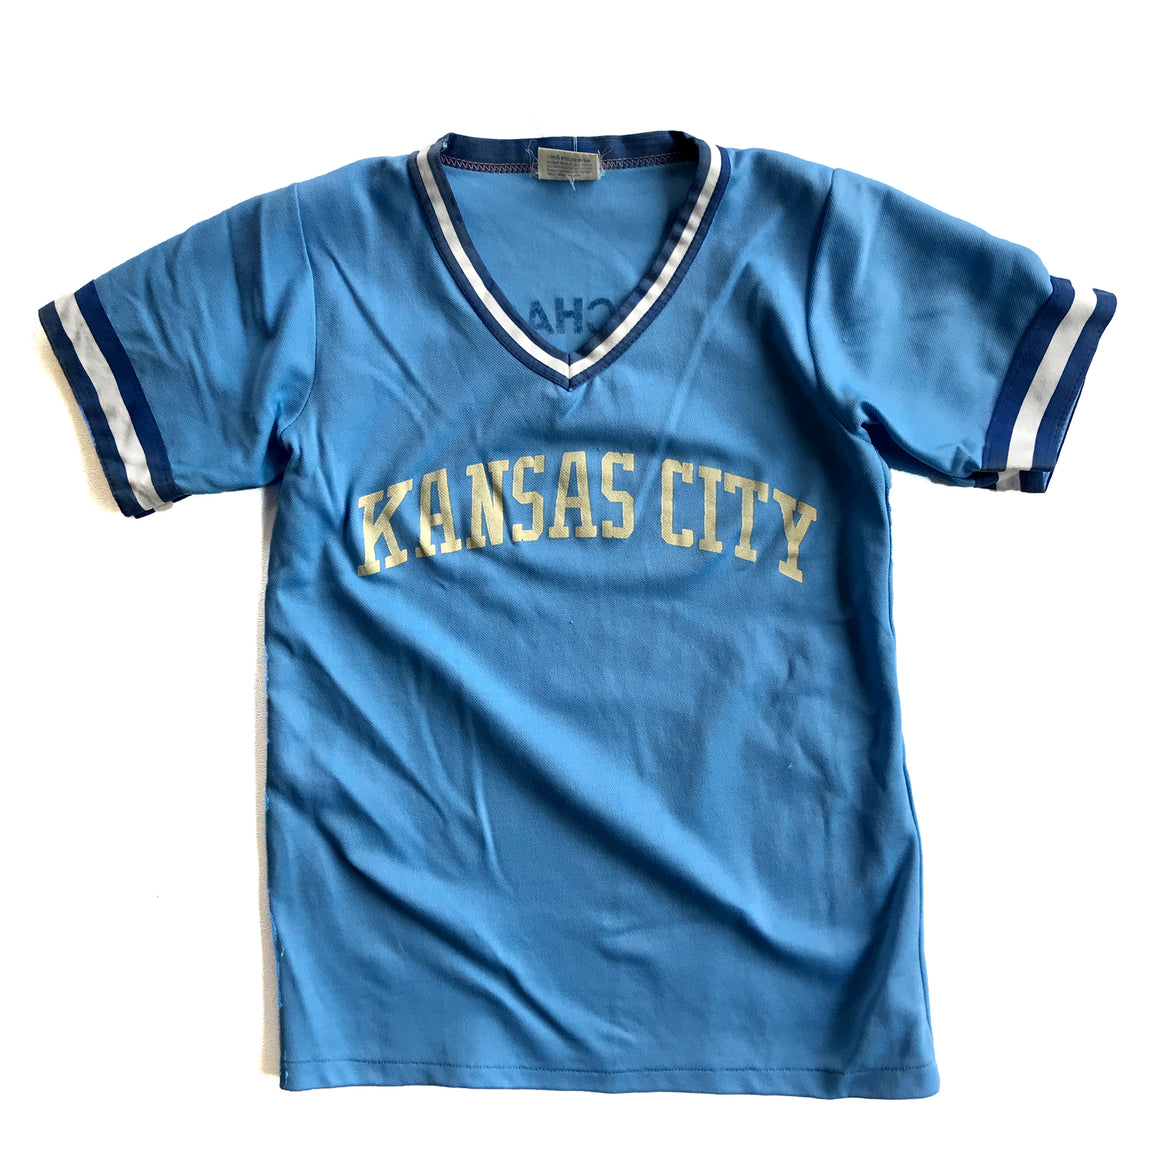 kansas city royals blue jersey